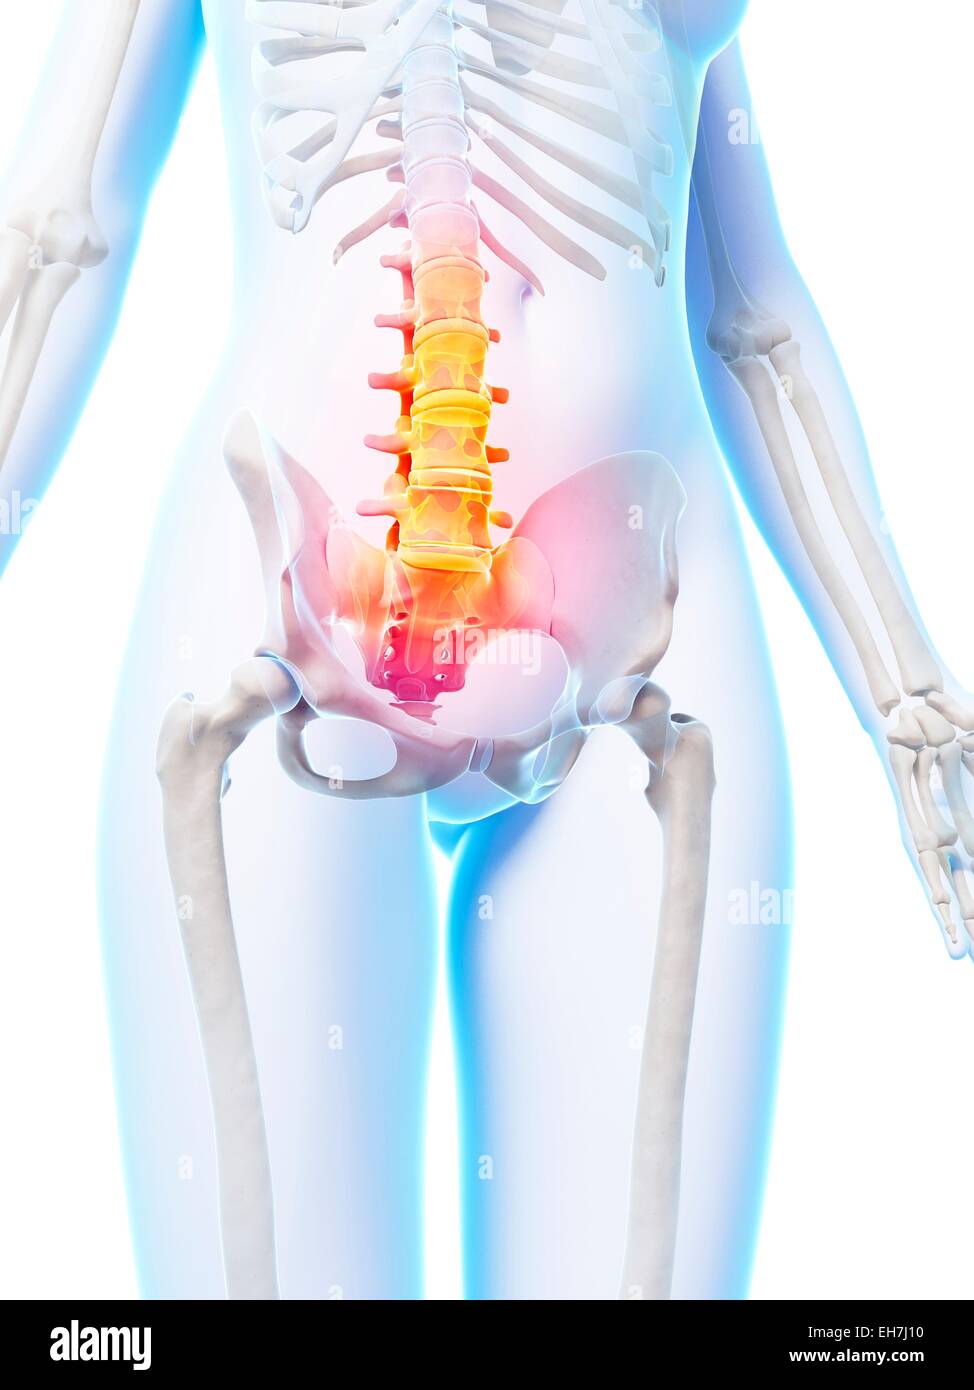 Human lumbar spine, illustration Stock Photo